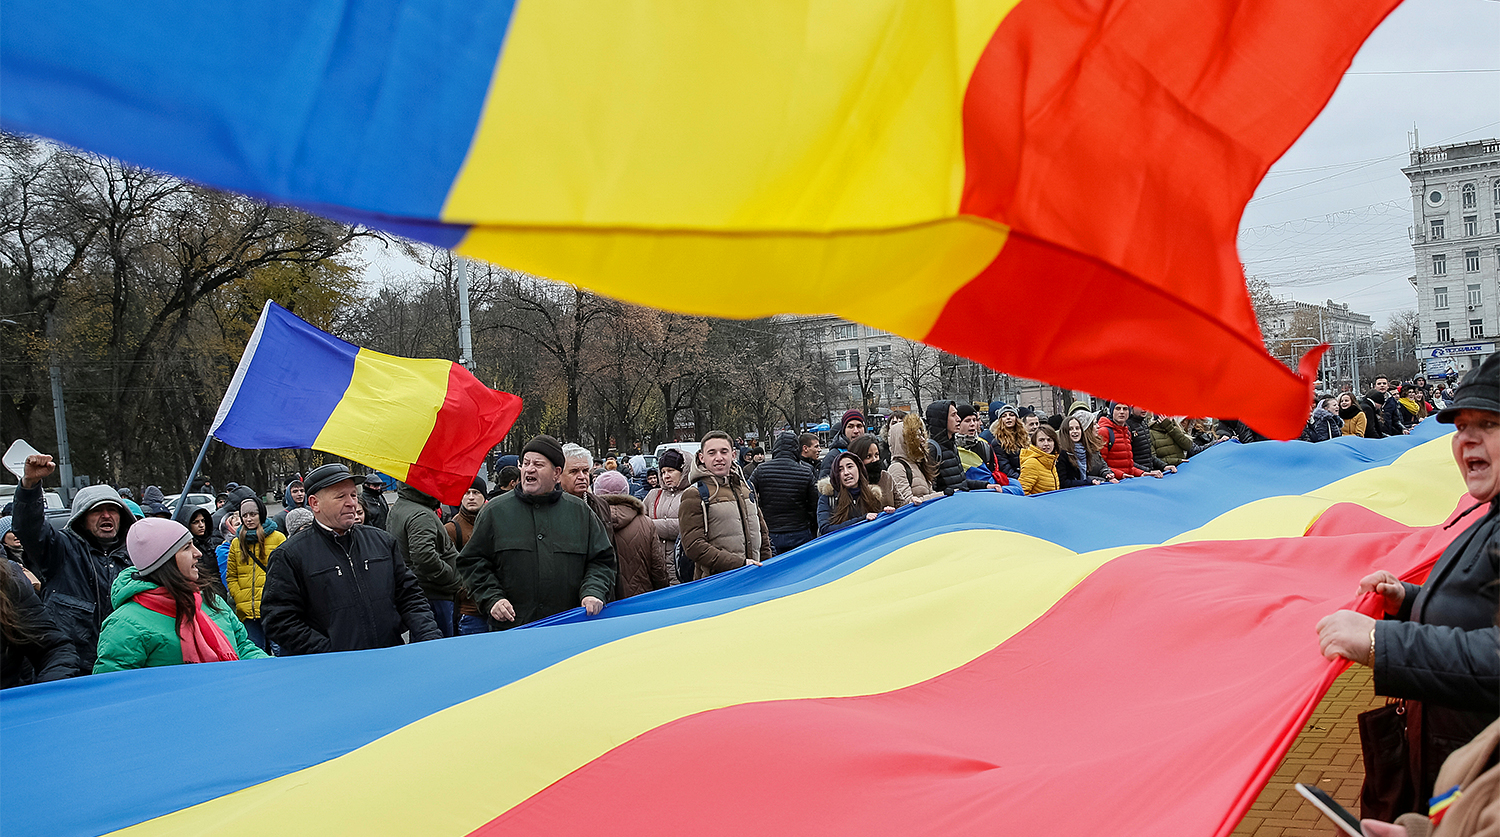 Скандального экс-мэра Кишинева прогнали с площади митингующие